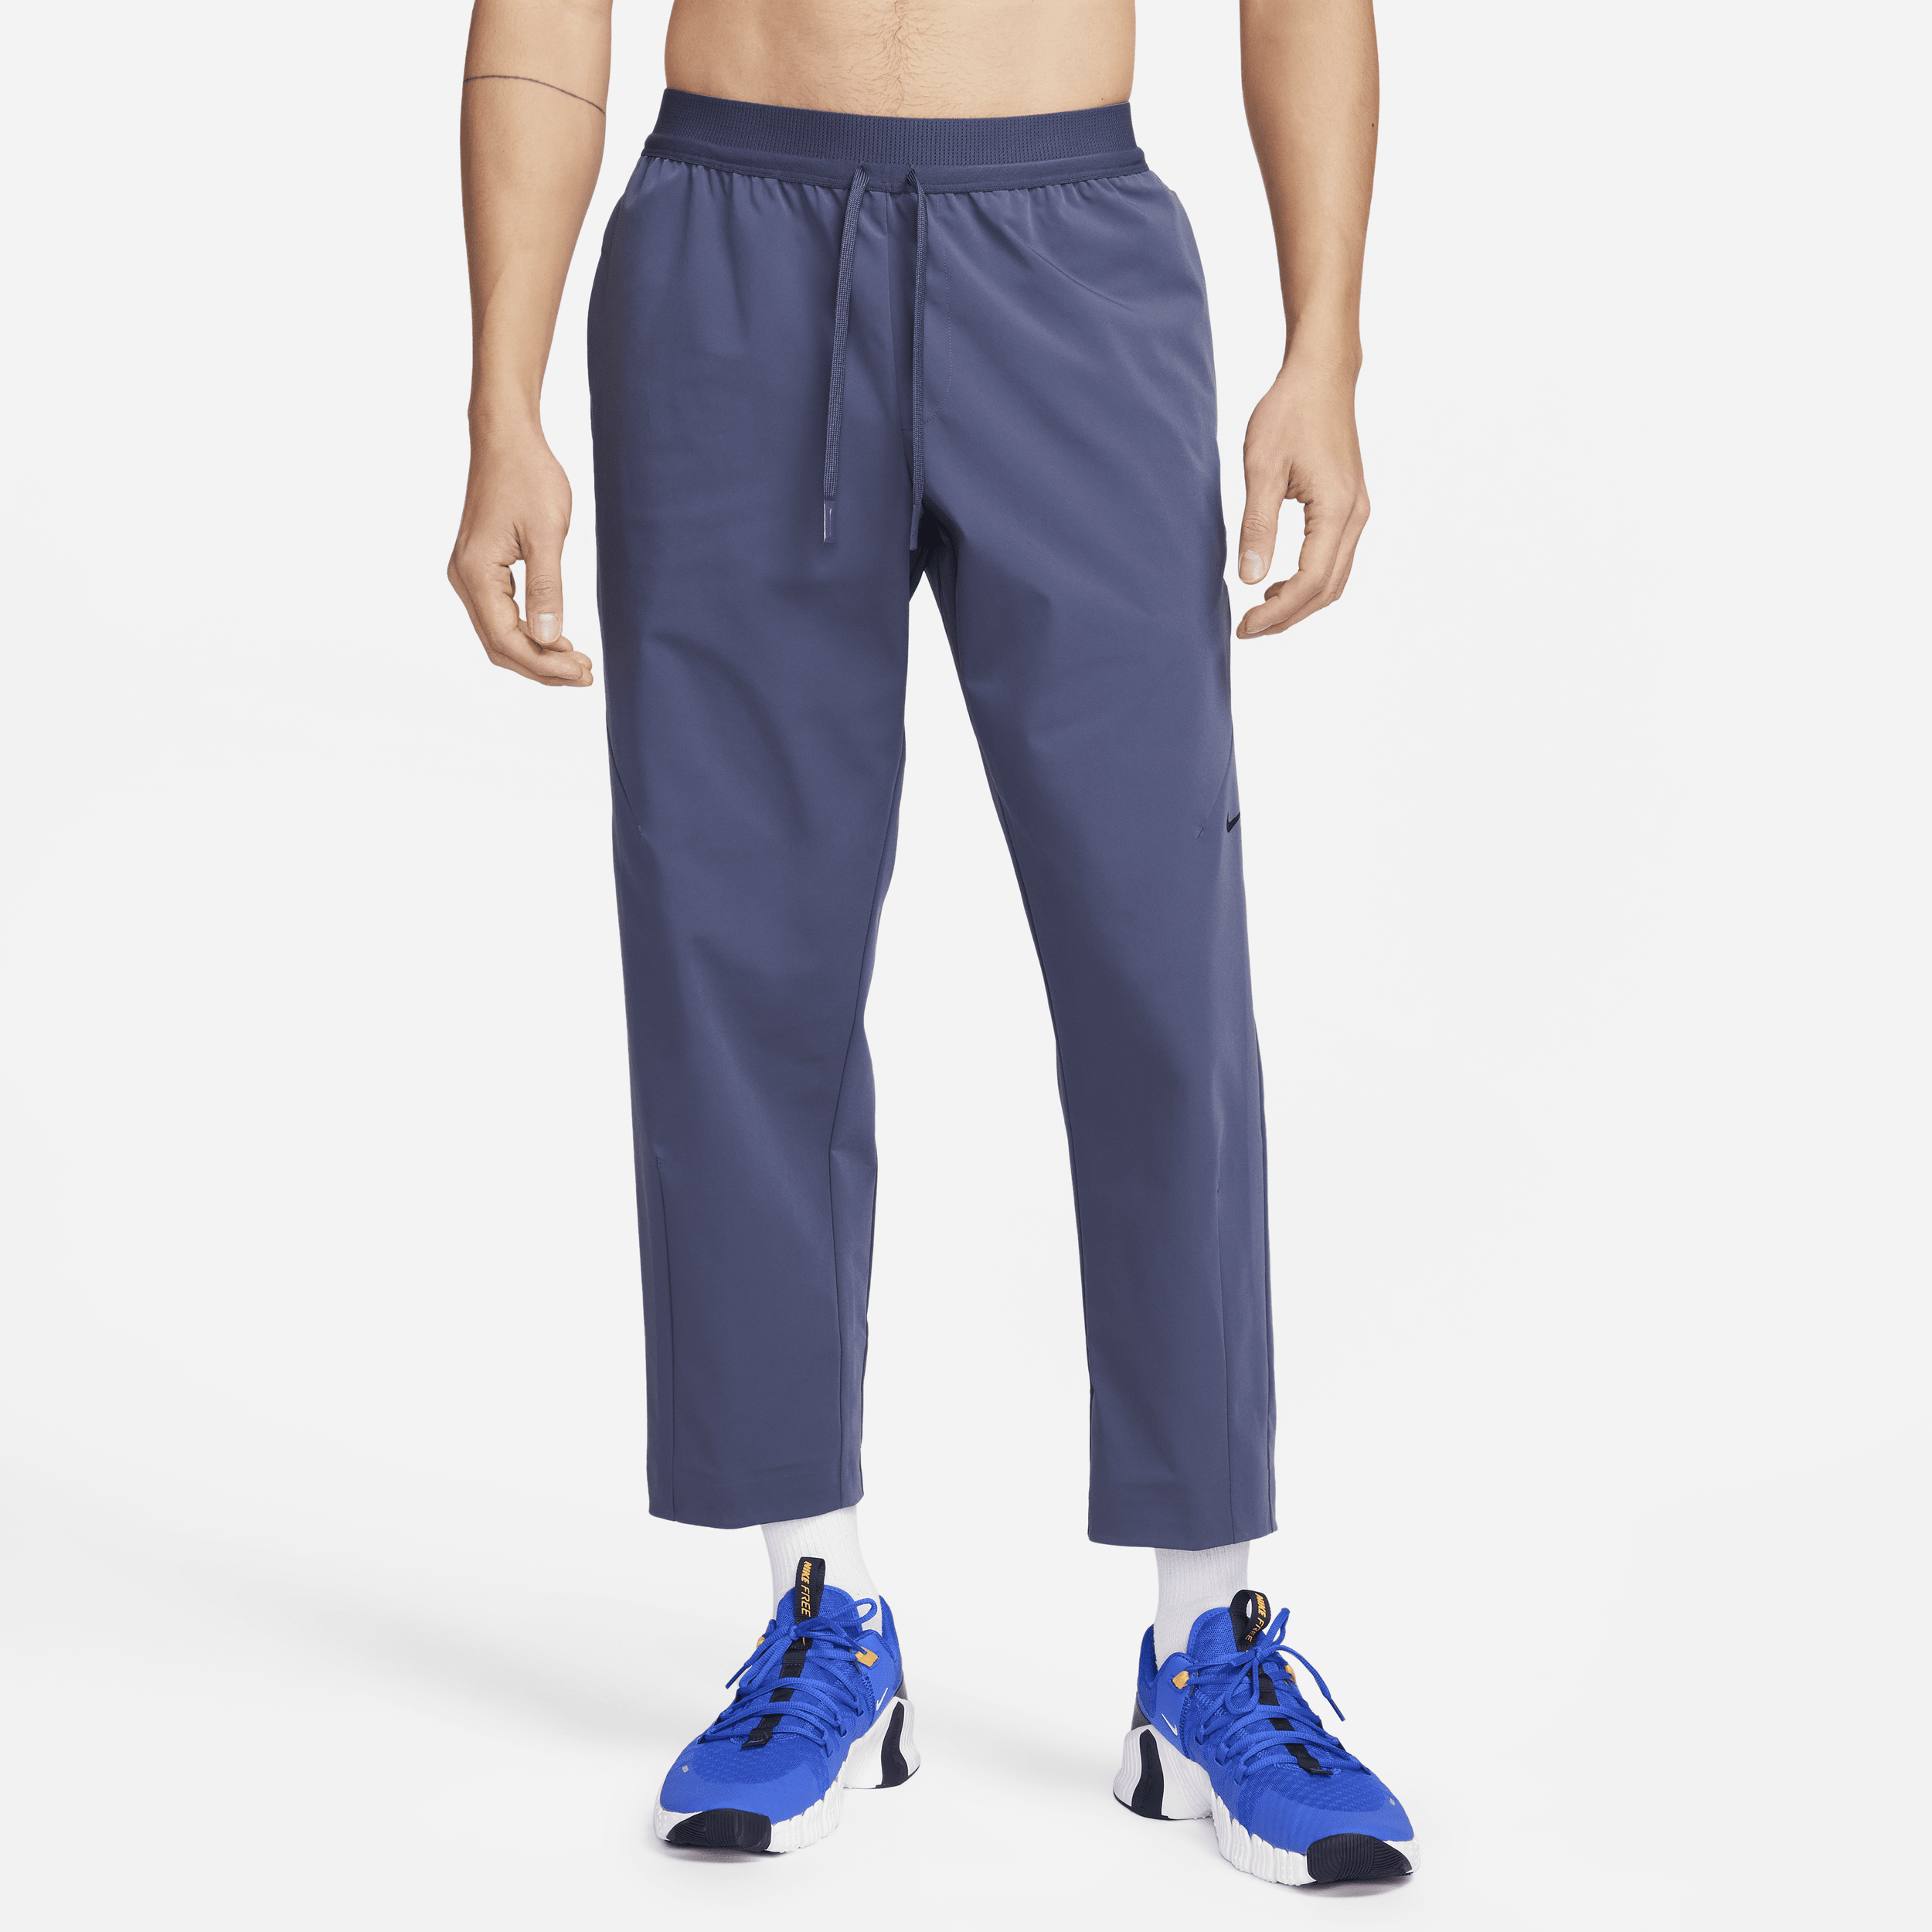 Nike A.P.S. Pantaloni versatili in tessuto Dri-FIT – Uomo - Blu